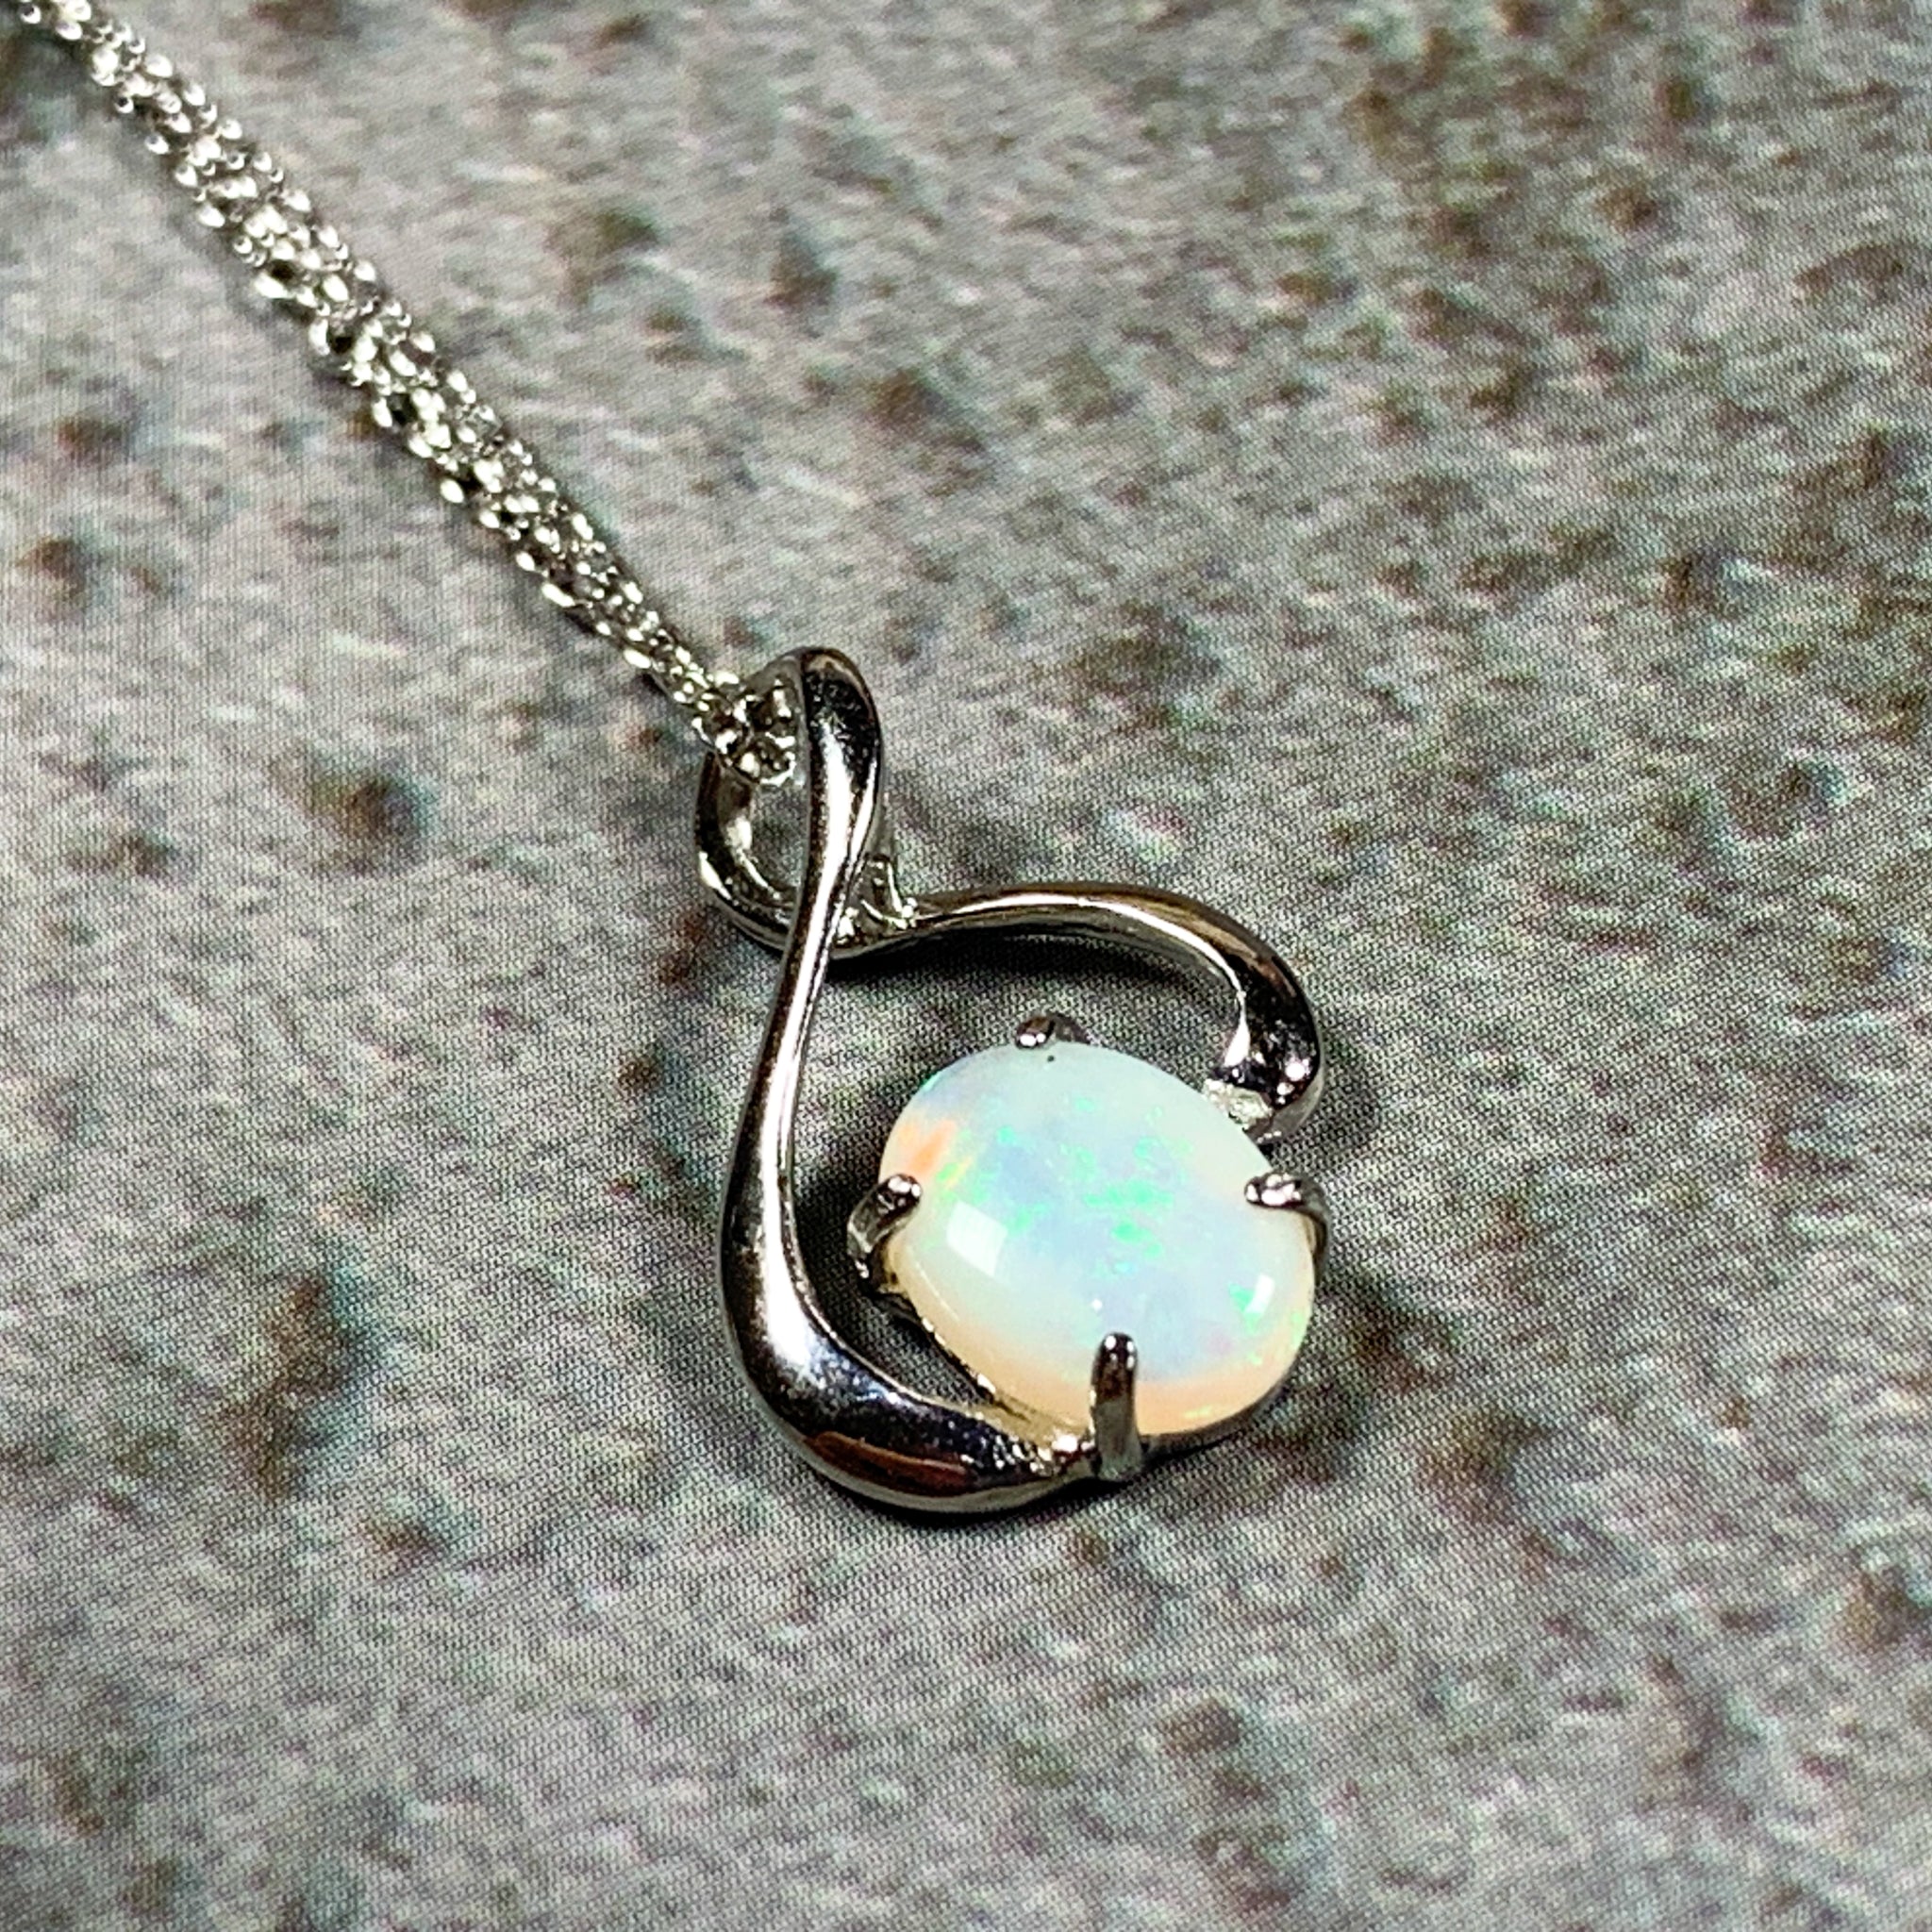 Sterling Silver White Opal pendant necklace loop design with opal 8x6mm - Masterpiece Jewellery Opal & Gems Sydney Australia | Online Shop